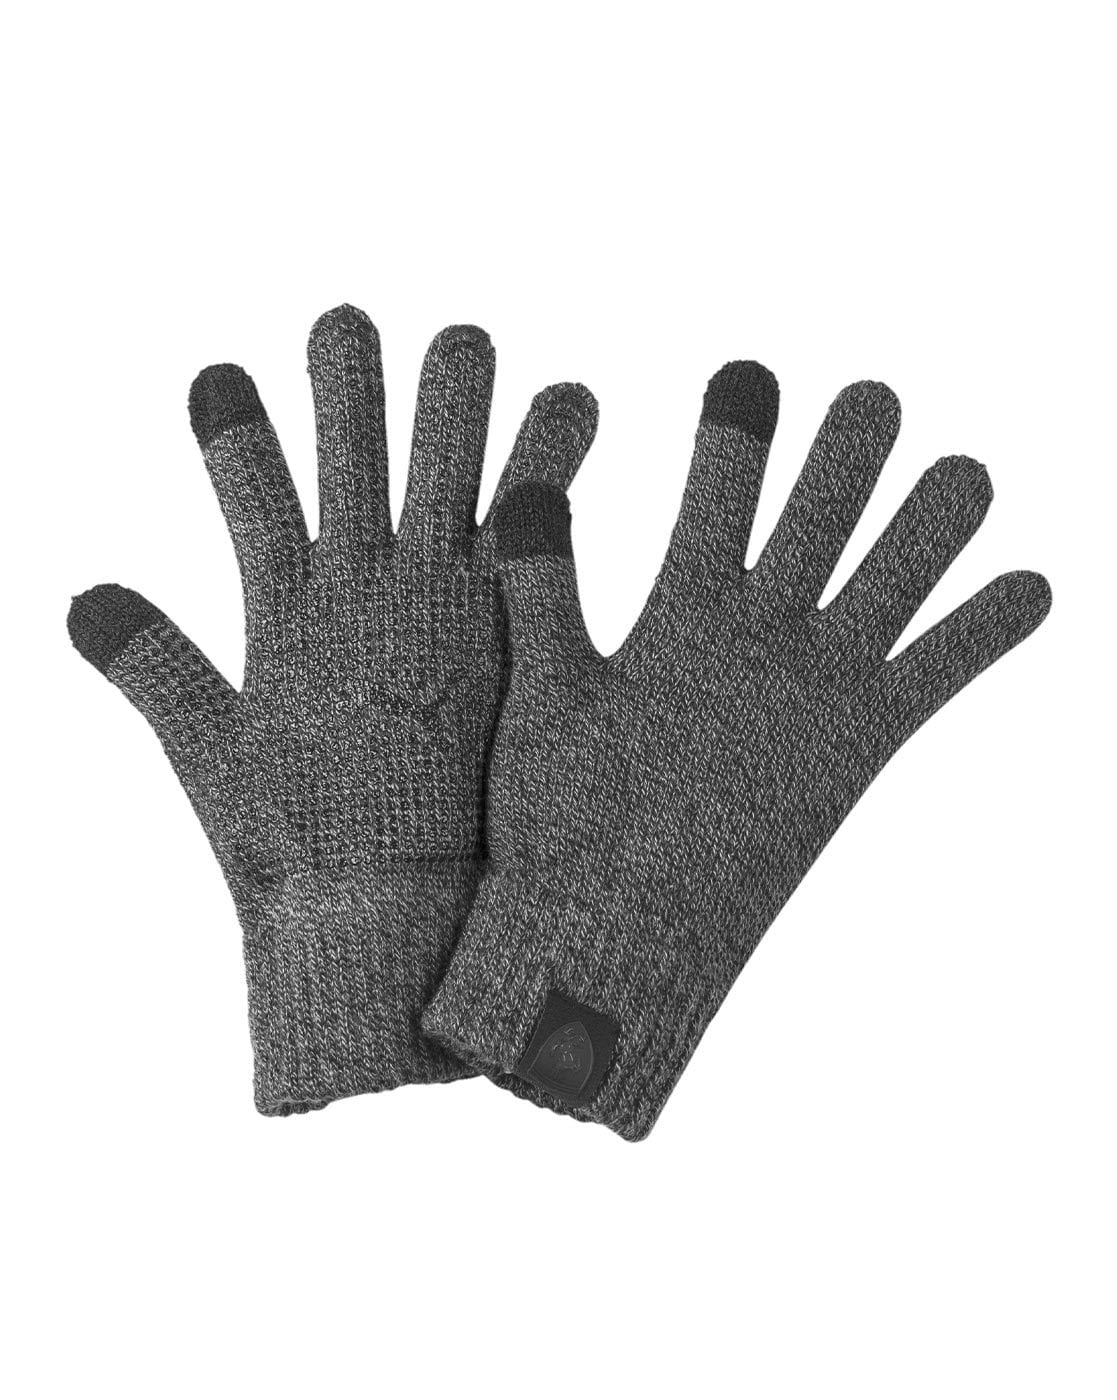 puma gloves india